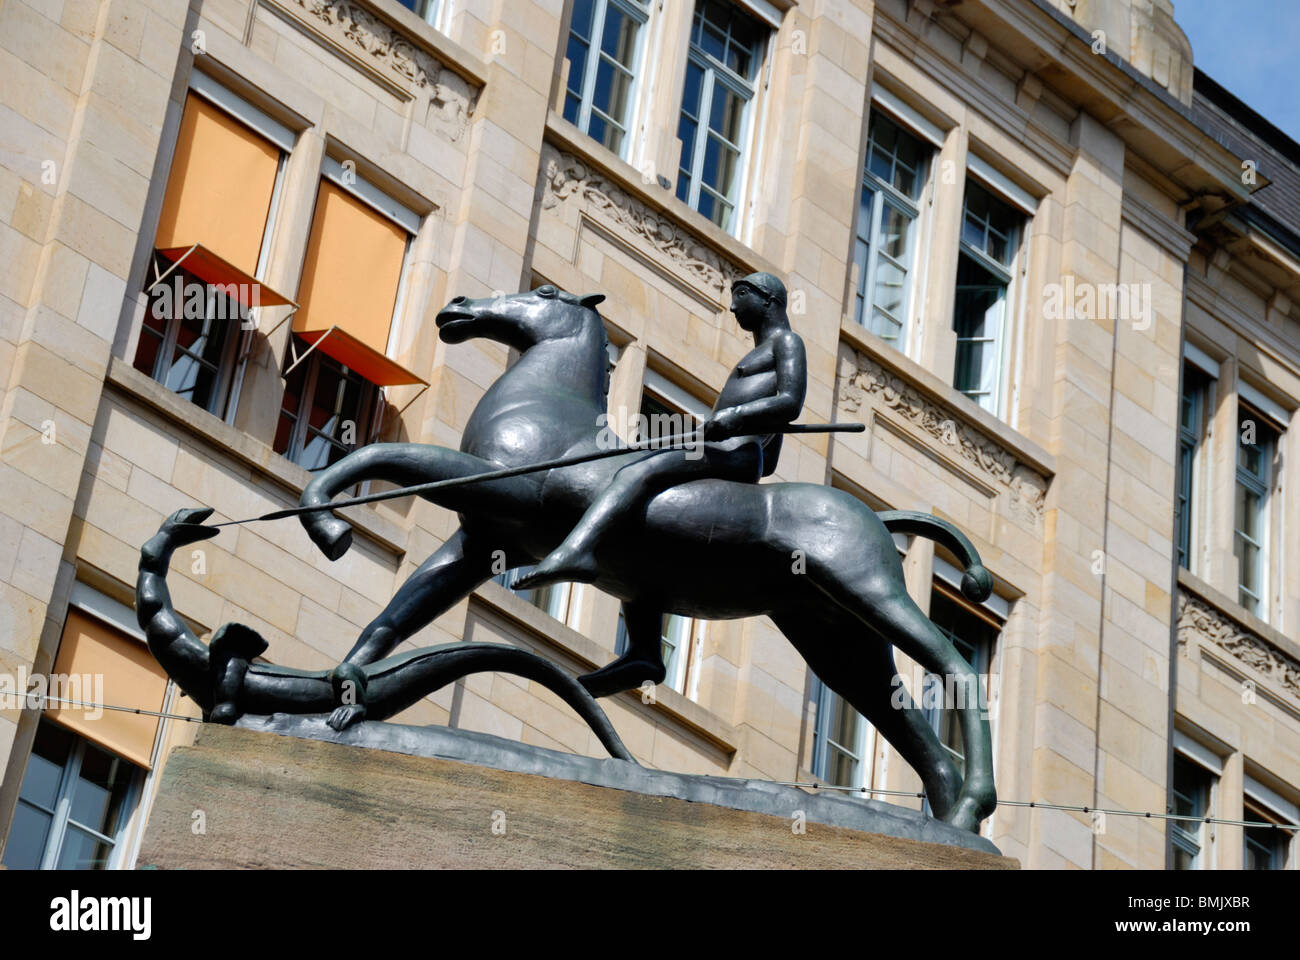 Statue des Hl. Georg tötet den Drachen in Kohlberg, Basel, Schweiz  Stockfotografie - Alamy